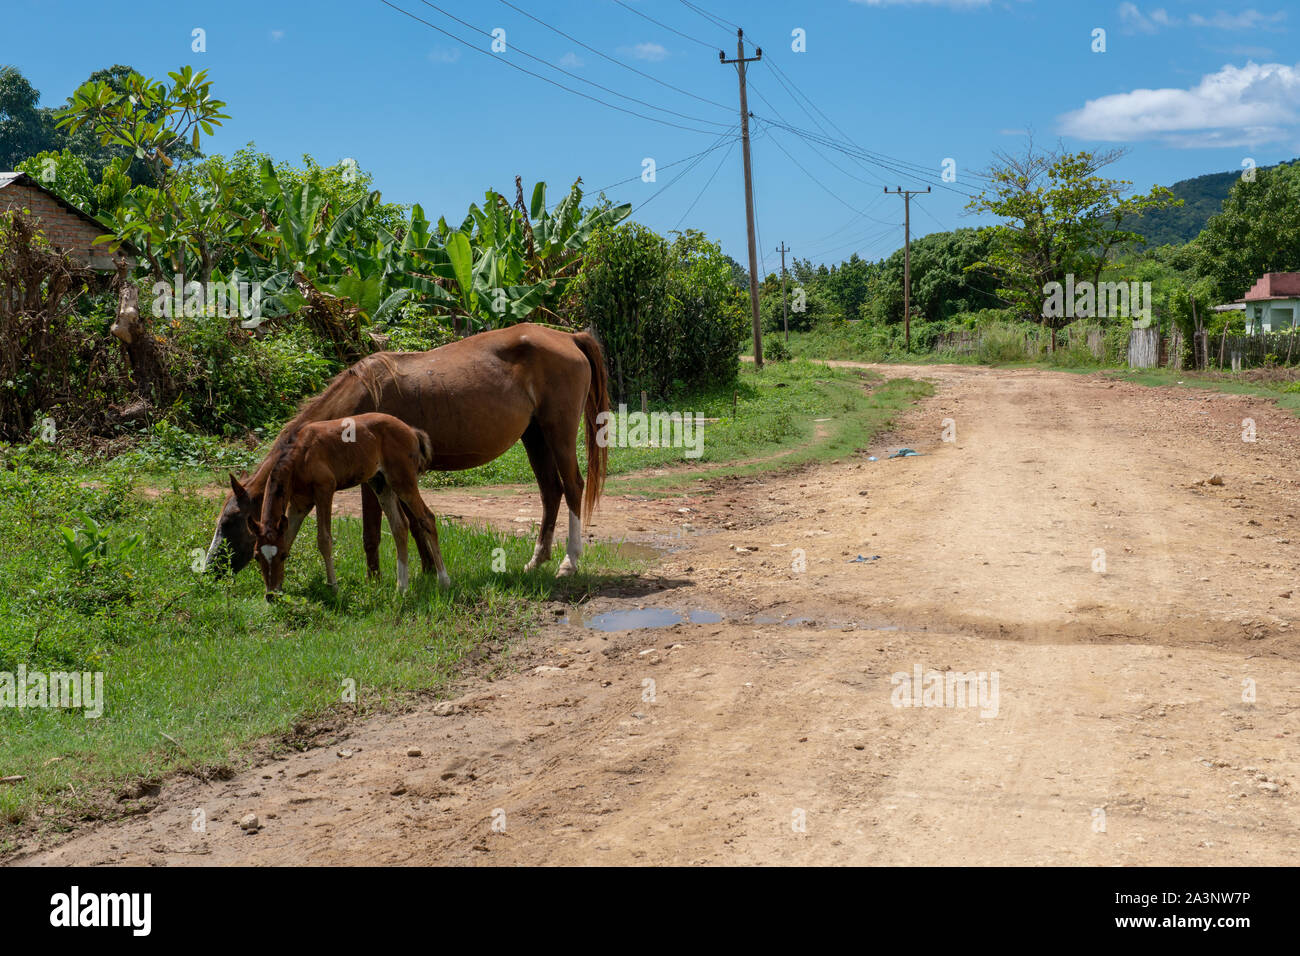 Rural scenery around the town of Trinidad de Cuba in October 2019 Stock Photo